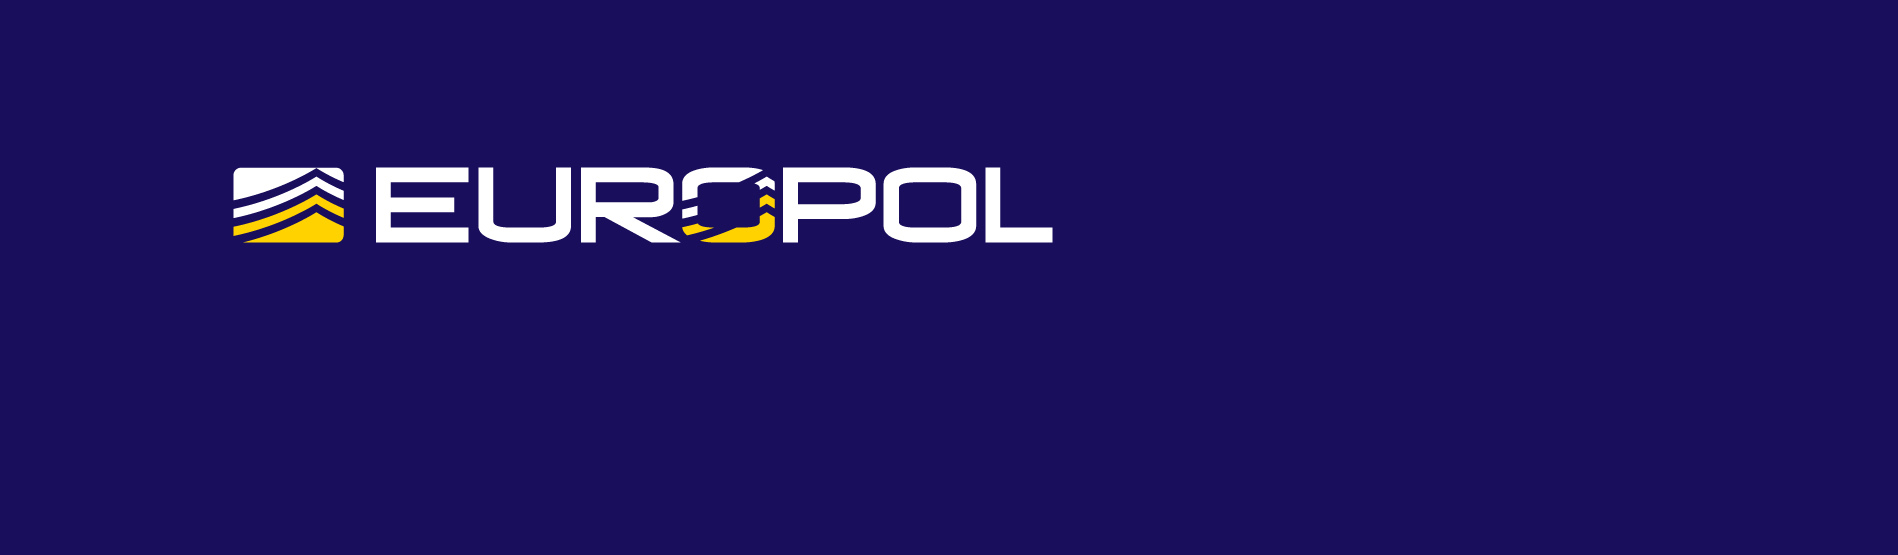 the Europol logo